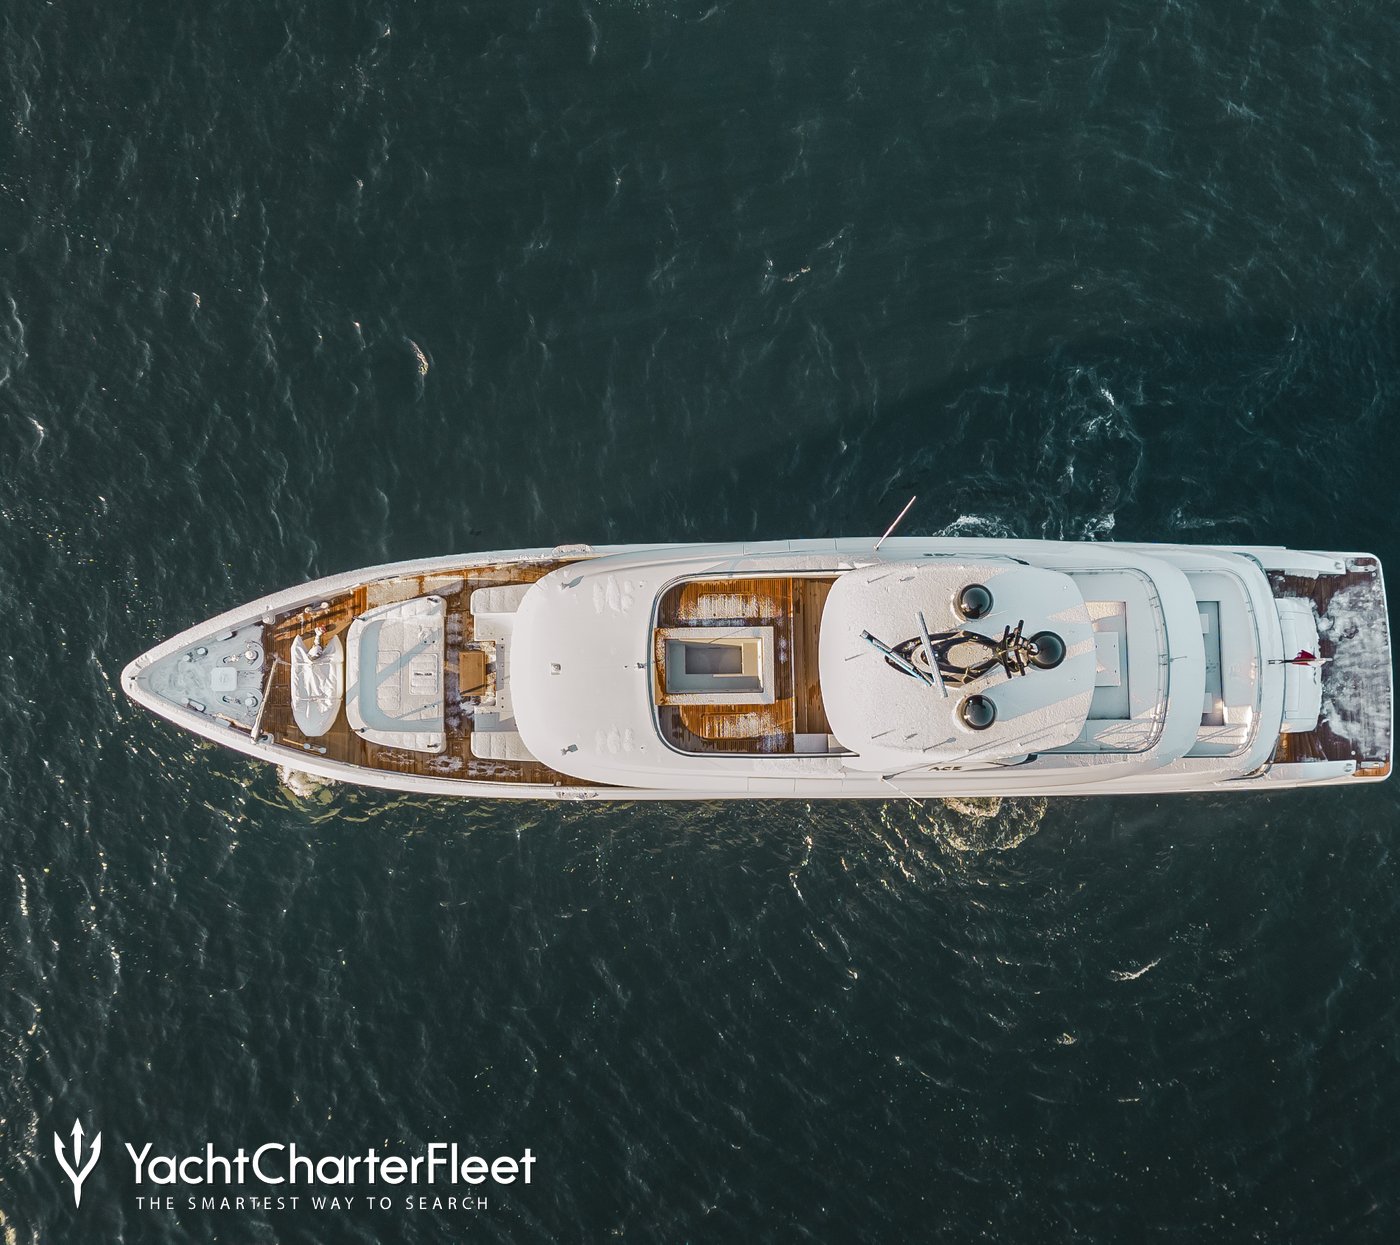 https://image.yachtcharterfleet.com/w1400/h1245/qh/ca/k53ced14d/cms/photo/2379084/charter-yacht-ace-aerial.jpg